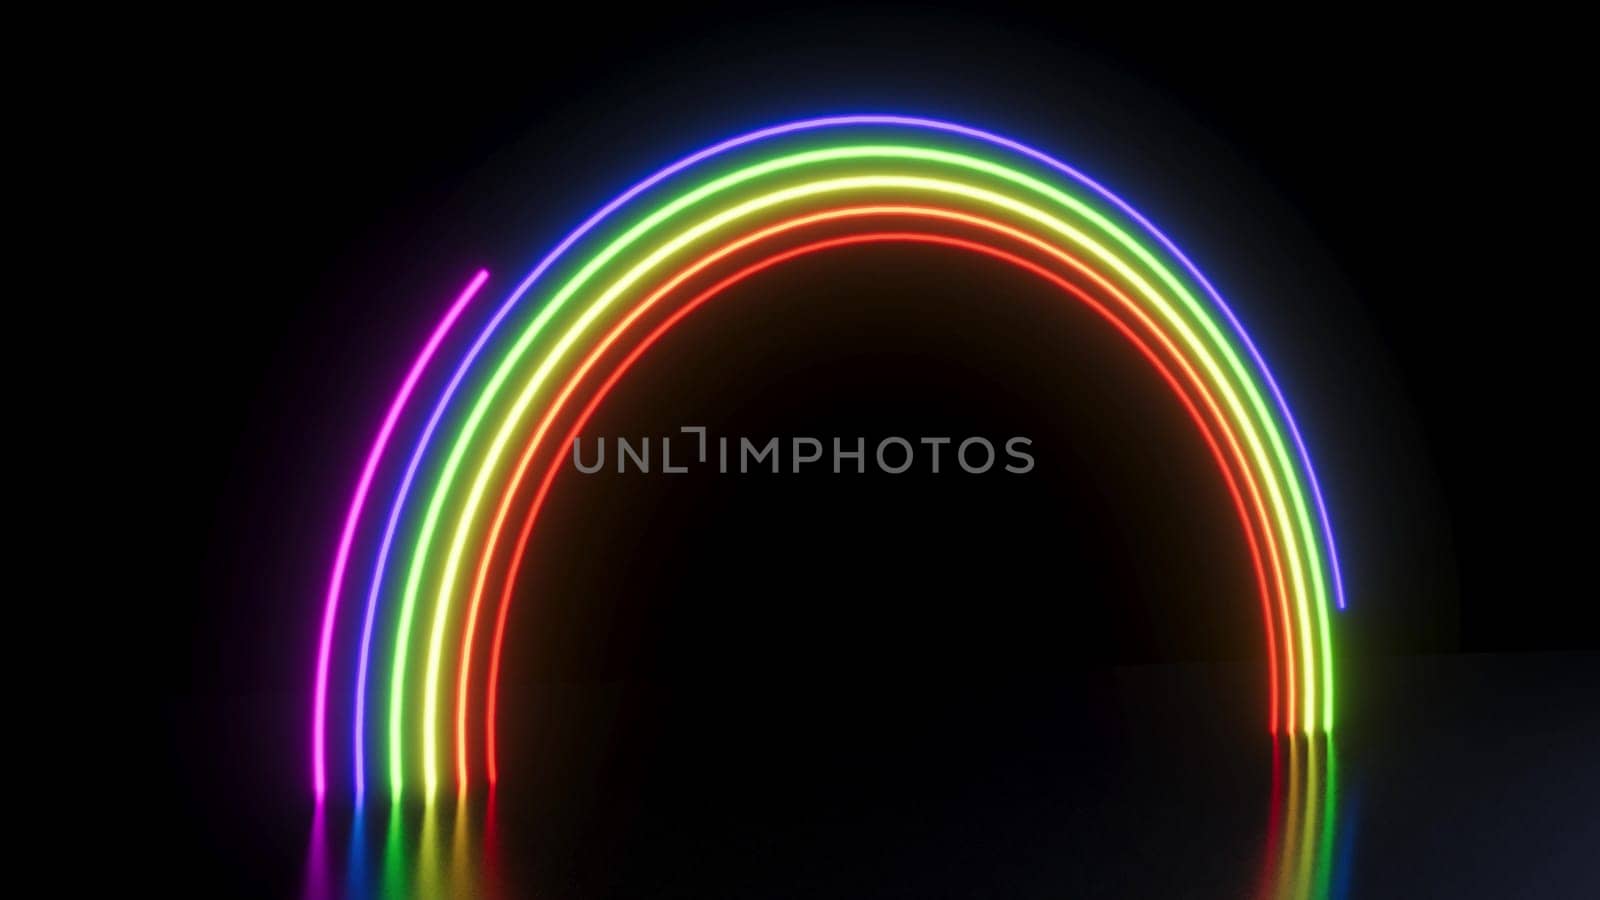 Glow rainbow lgbt on black mirror surface 3d render by Zozulinskyi